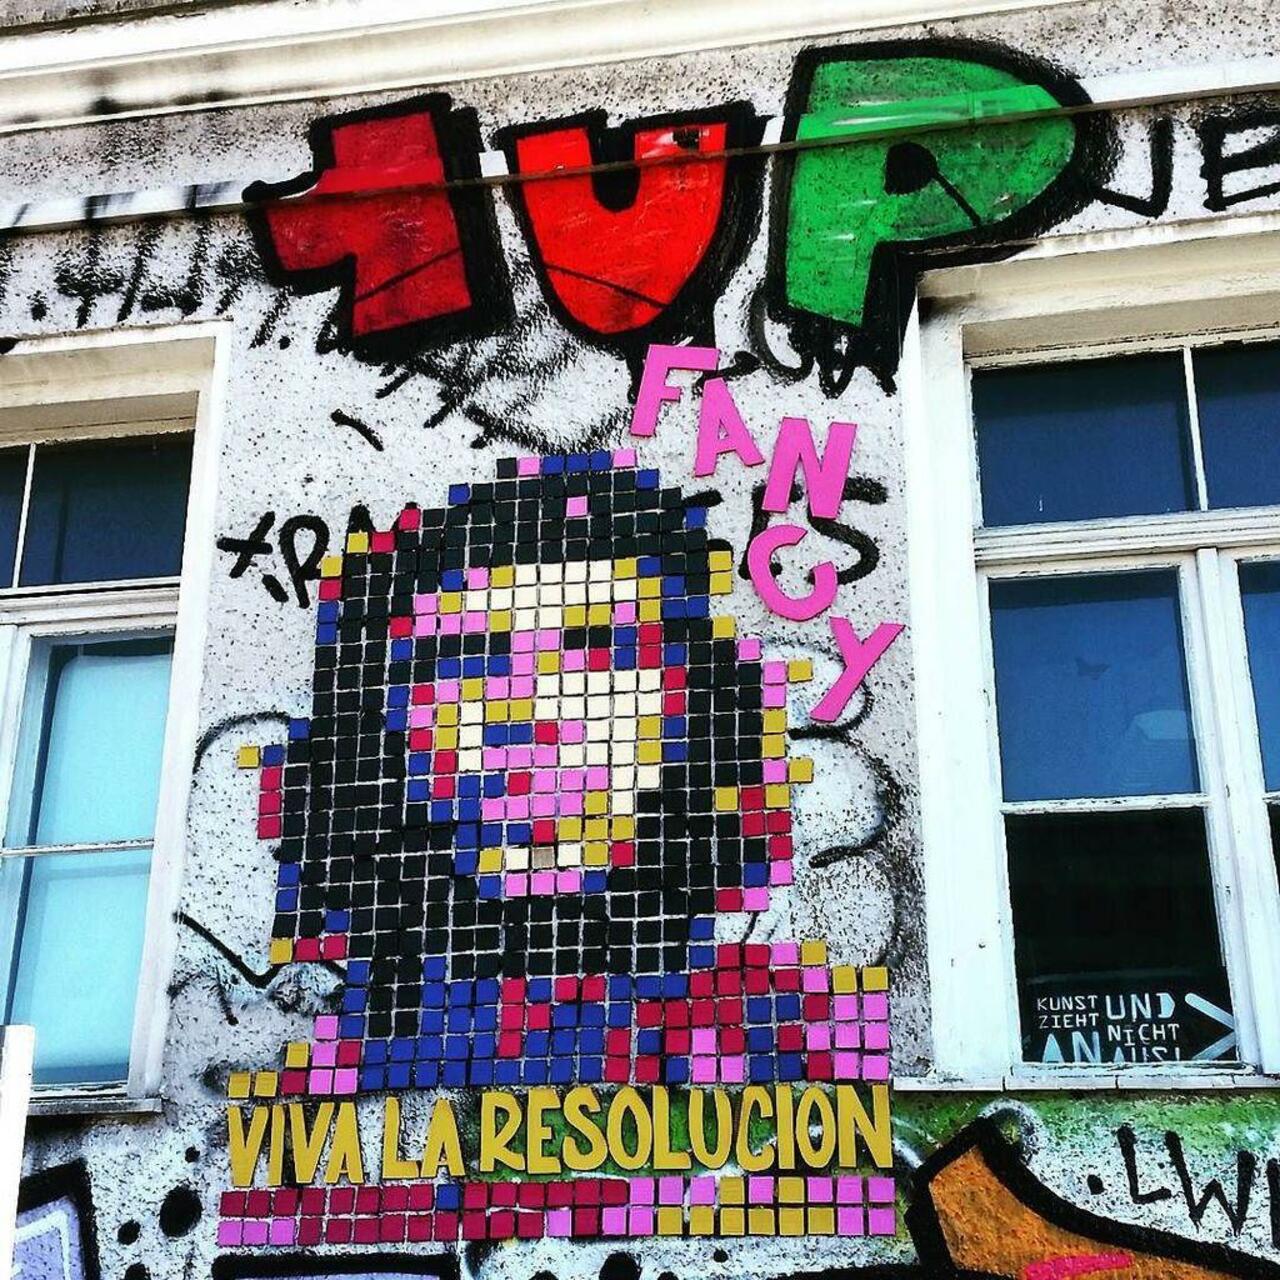 RT @StArtEverywhere: Viva la resolucion! 
#Graffiti #instadaily #instaphoto #streetart #streetartberlin #Berlin #Germany #streetartphoto… http://t.co/6sCU9WJ0kl